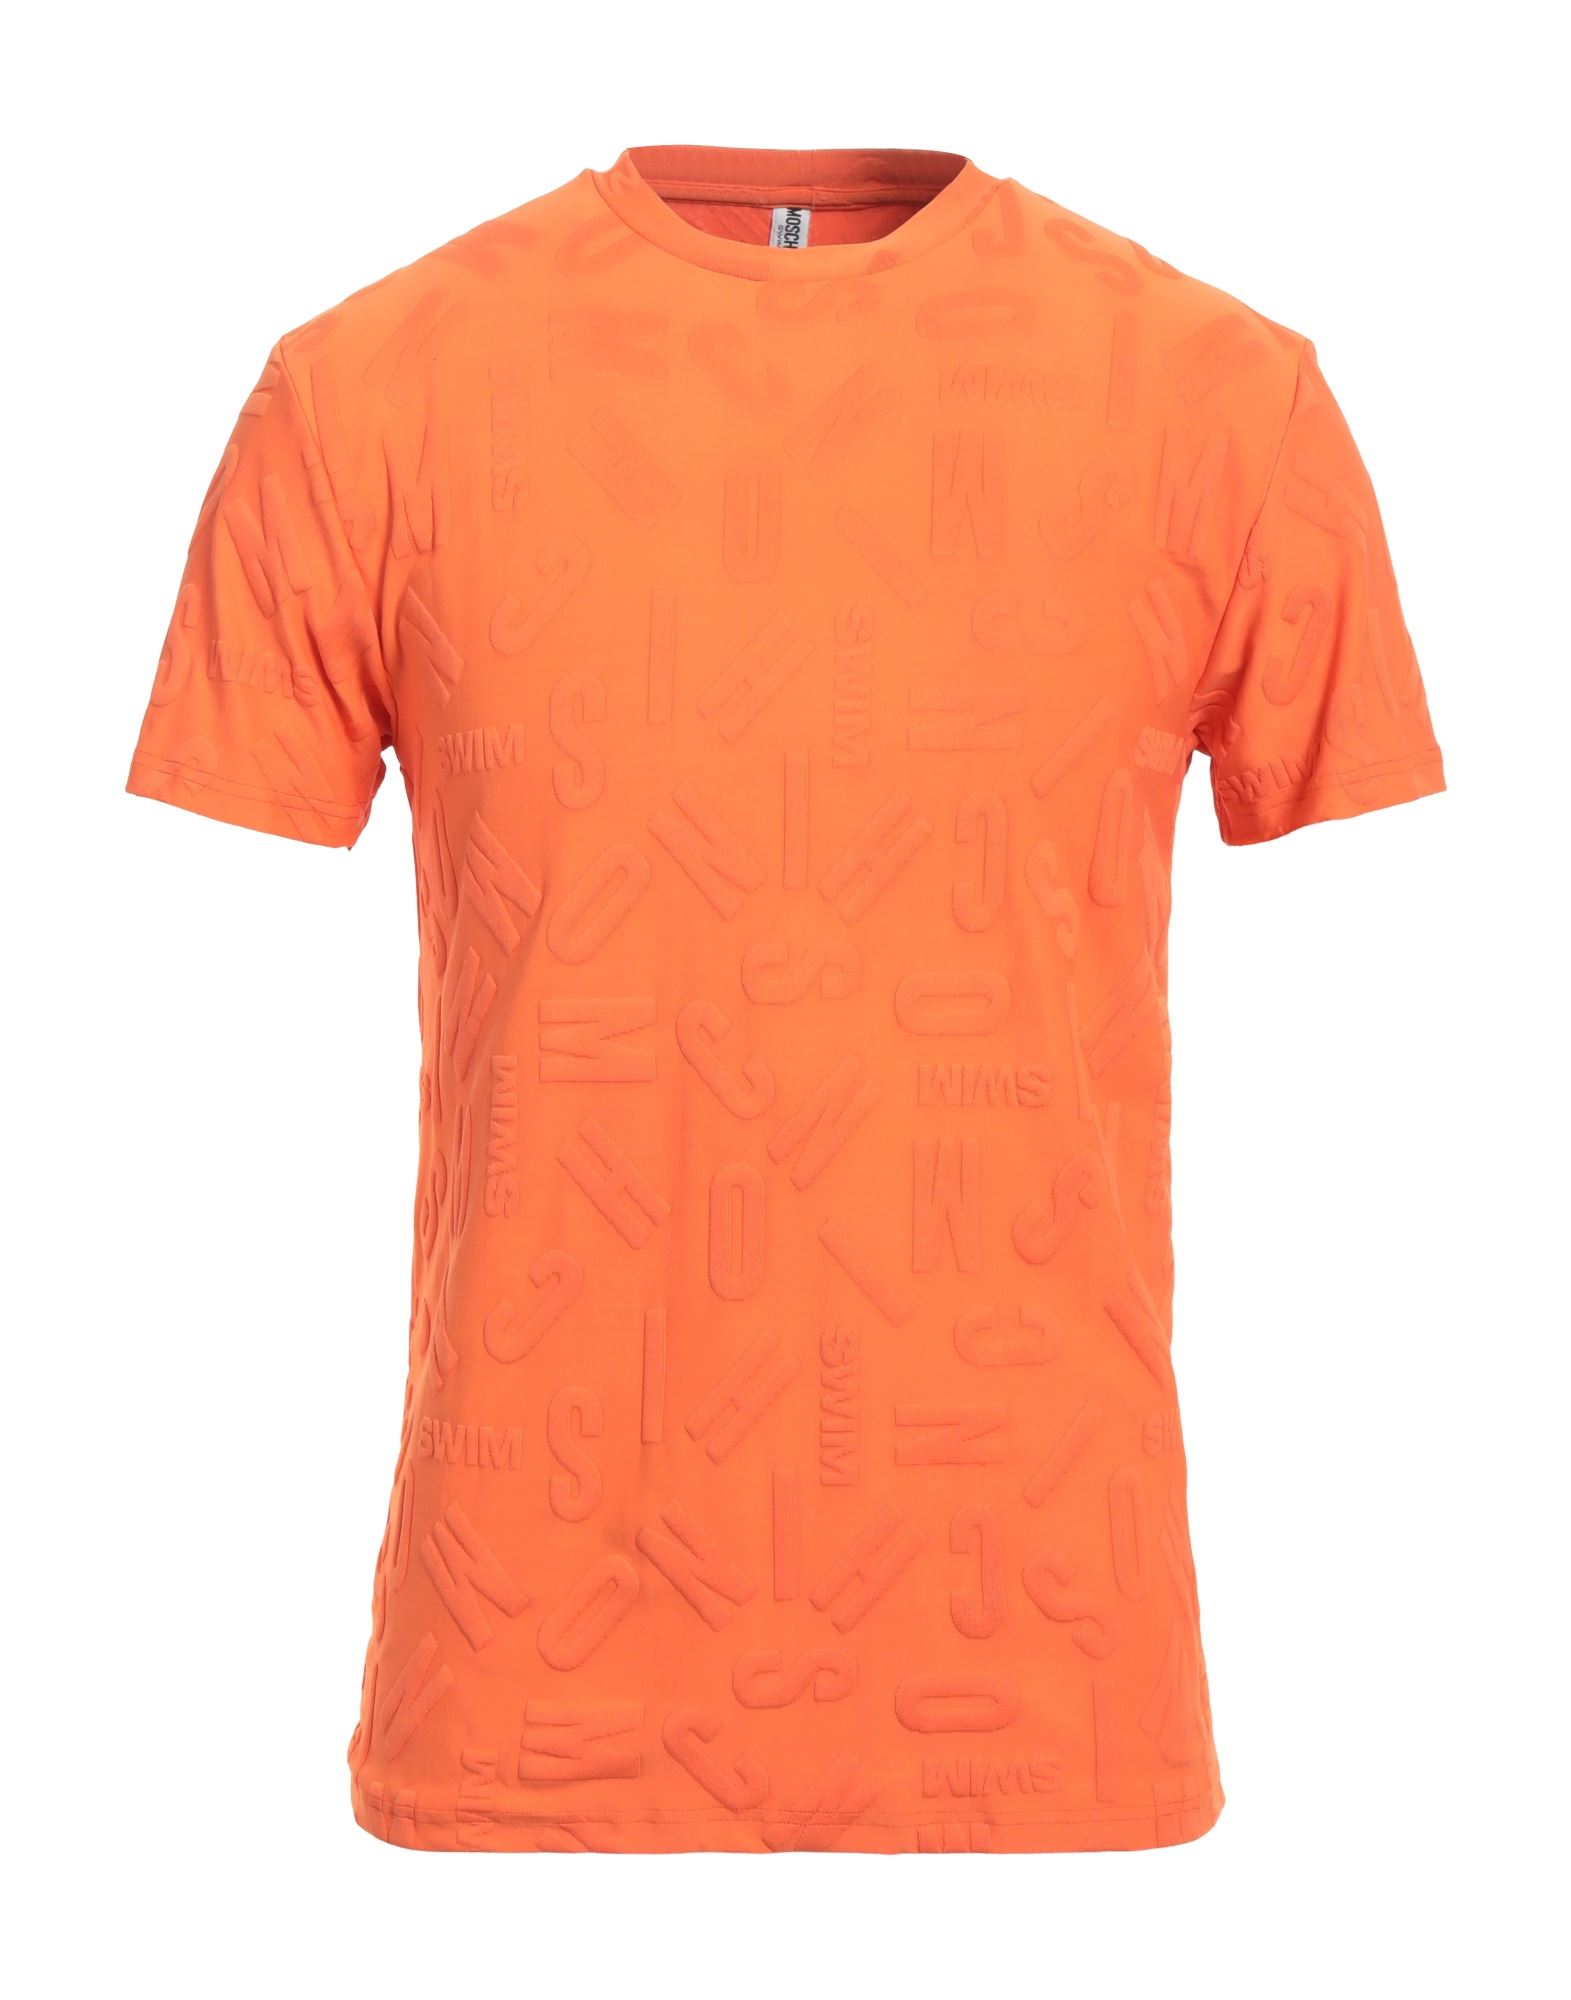 MOSCHINO T-shirts Herren Orange von MOSCHINO